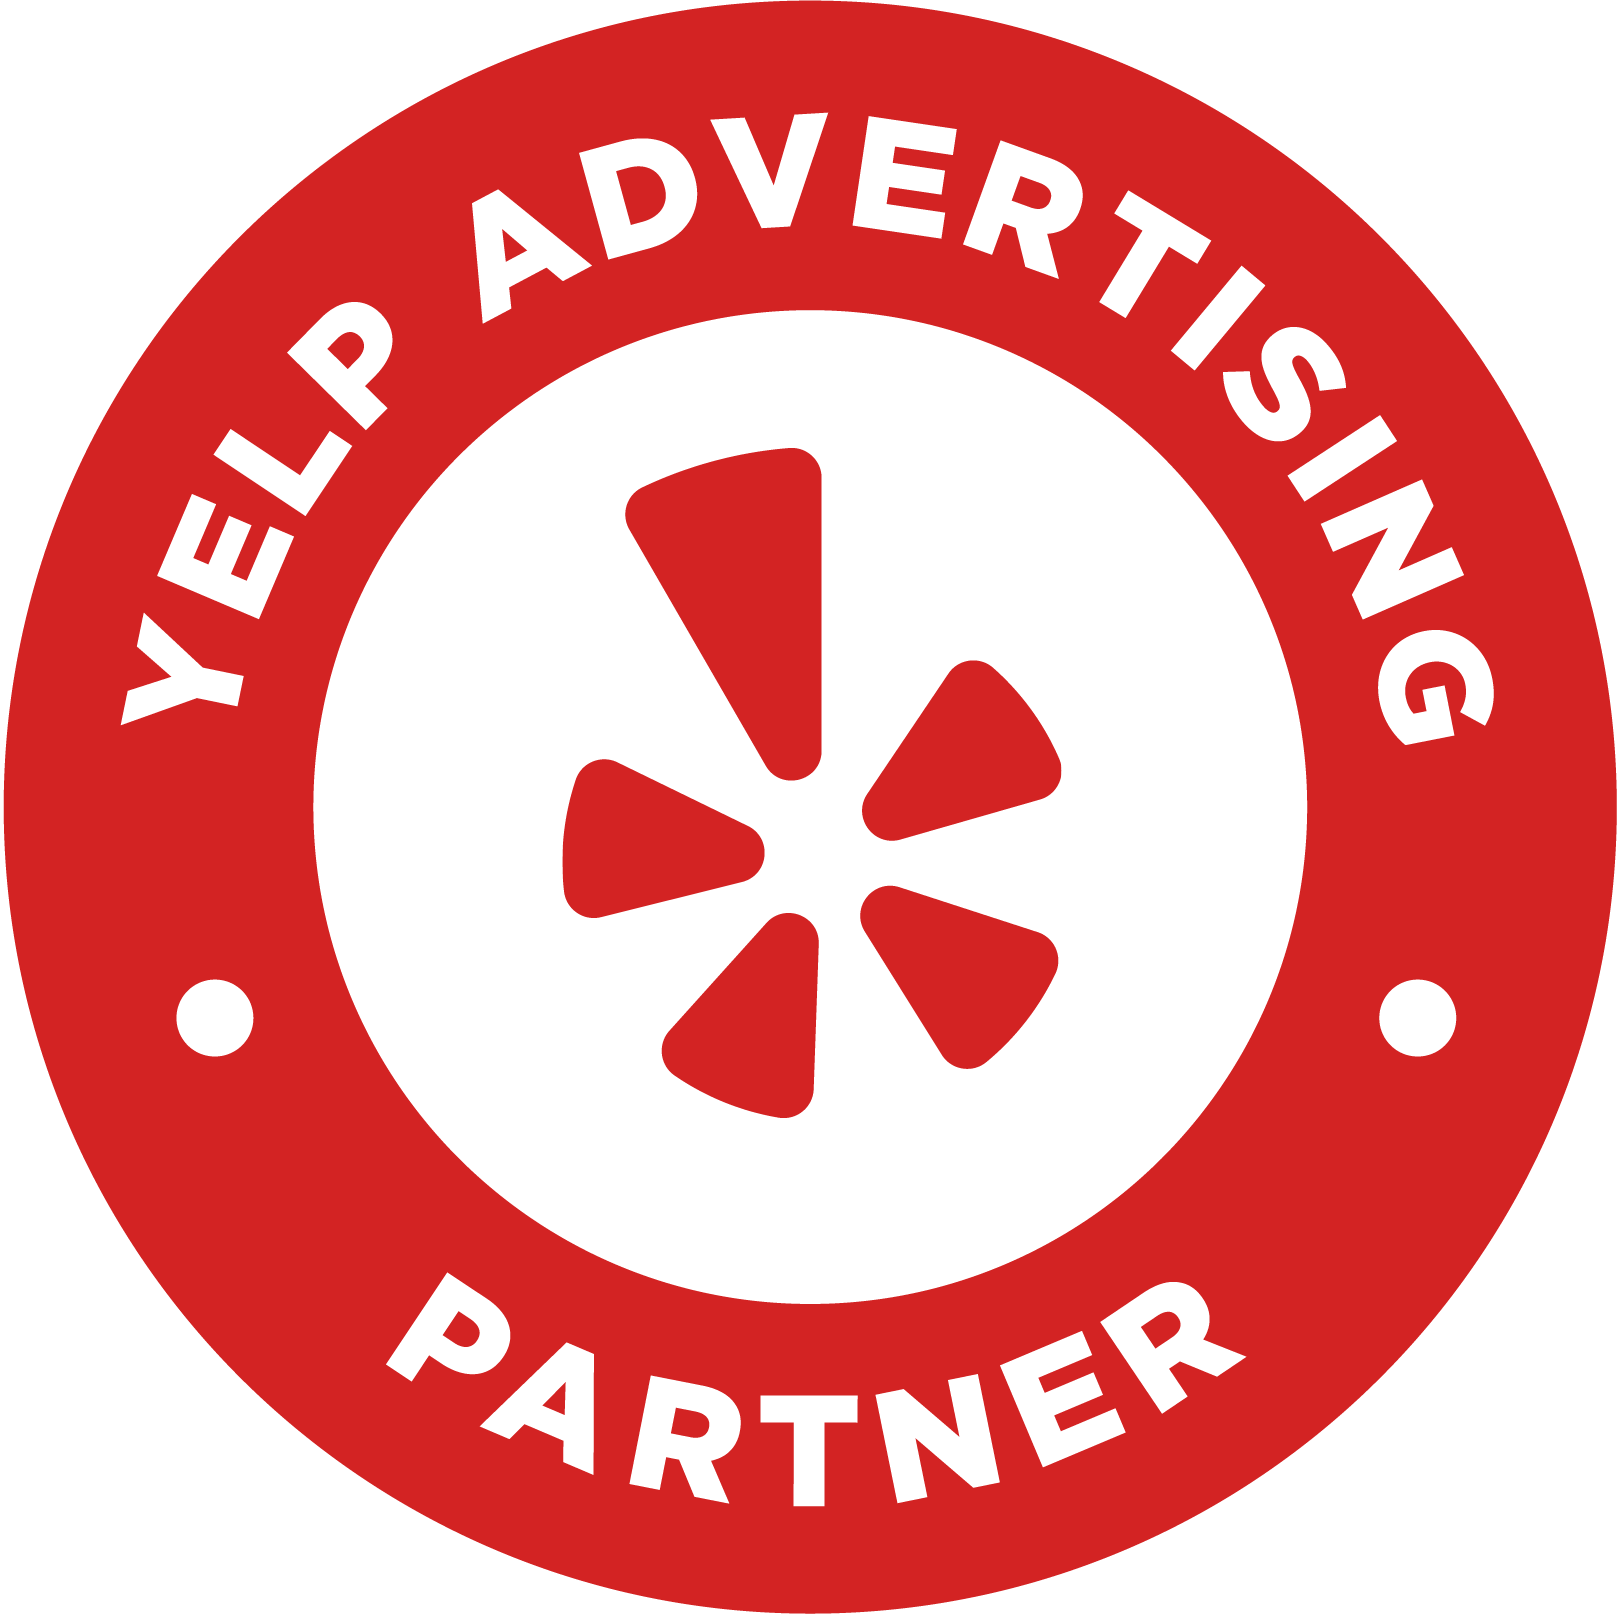 Yelp advertising partner - Alliance Home Improvement, Inc.